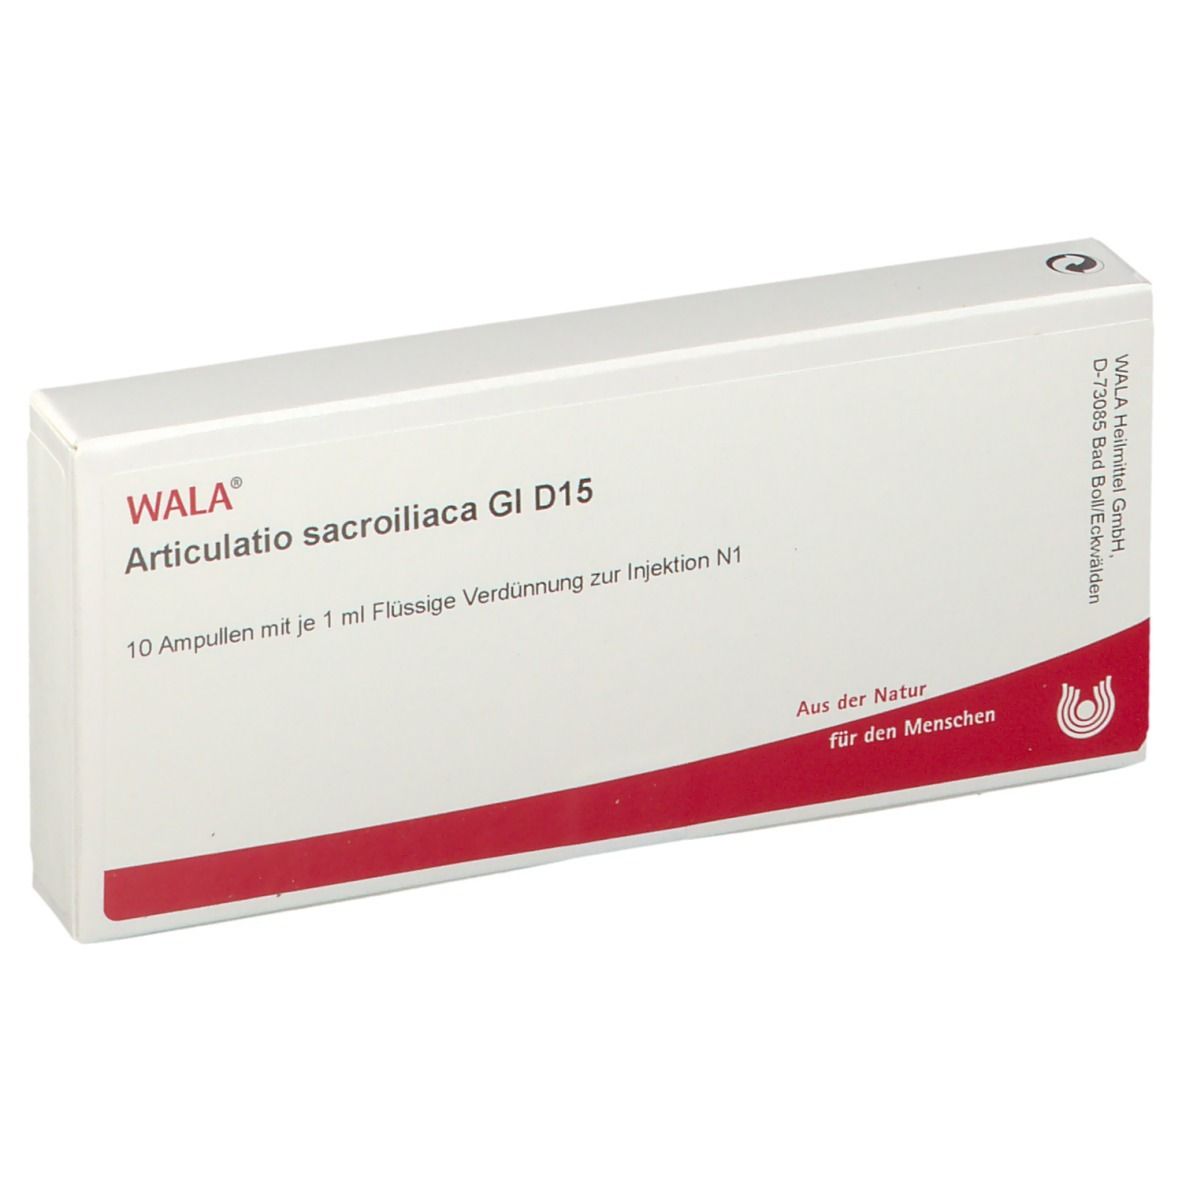 Wala® Articulatio sacroiliaca Gl D 15